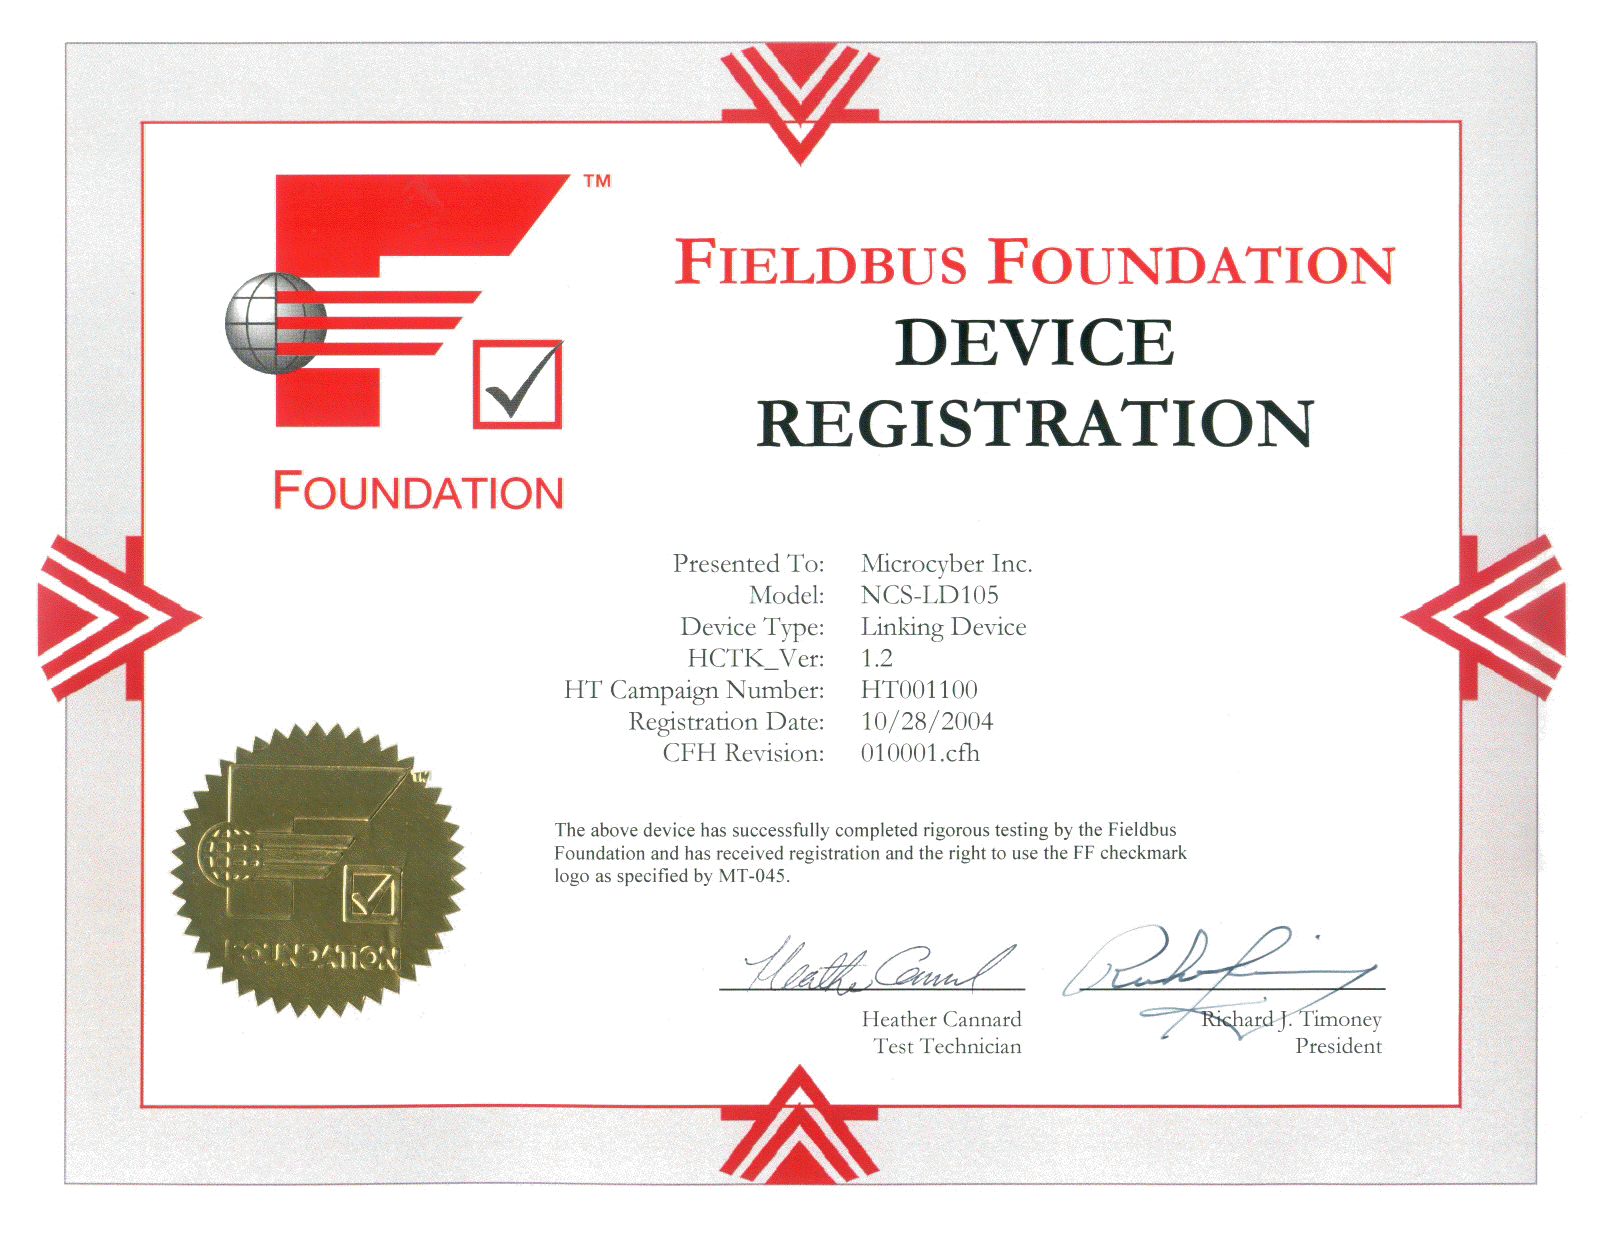 Registro do Dispositivo Fieldbus Foundation (NCS-LD105)